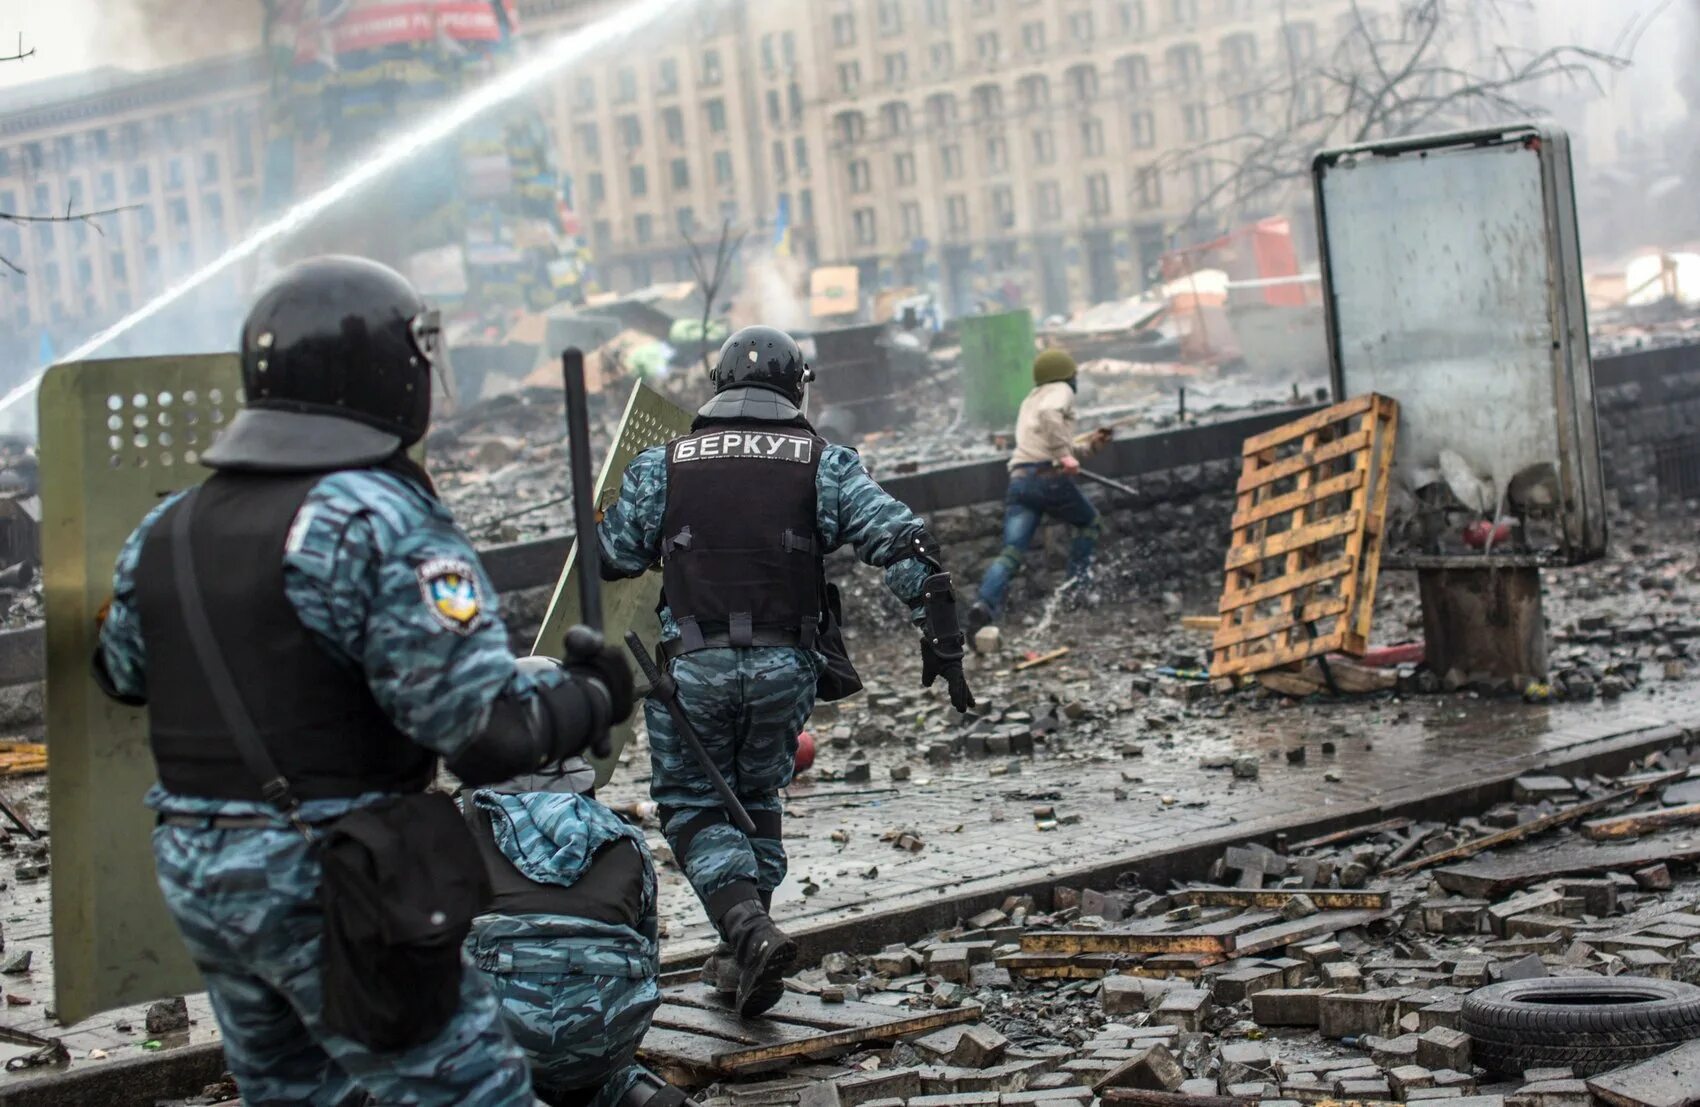 Беркут Украина Майдан на Украине в 2014. Евромайдан на Украине в 2014 Беркут.